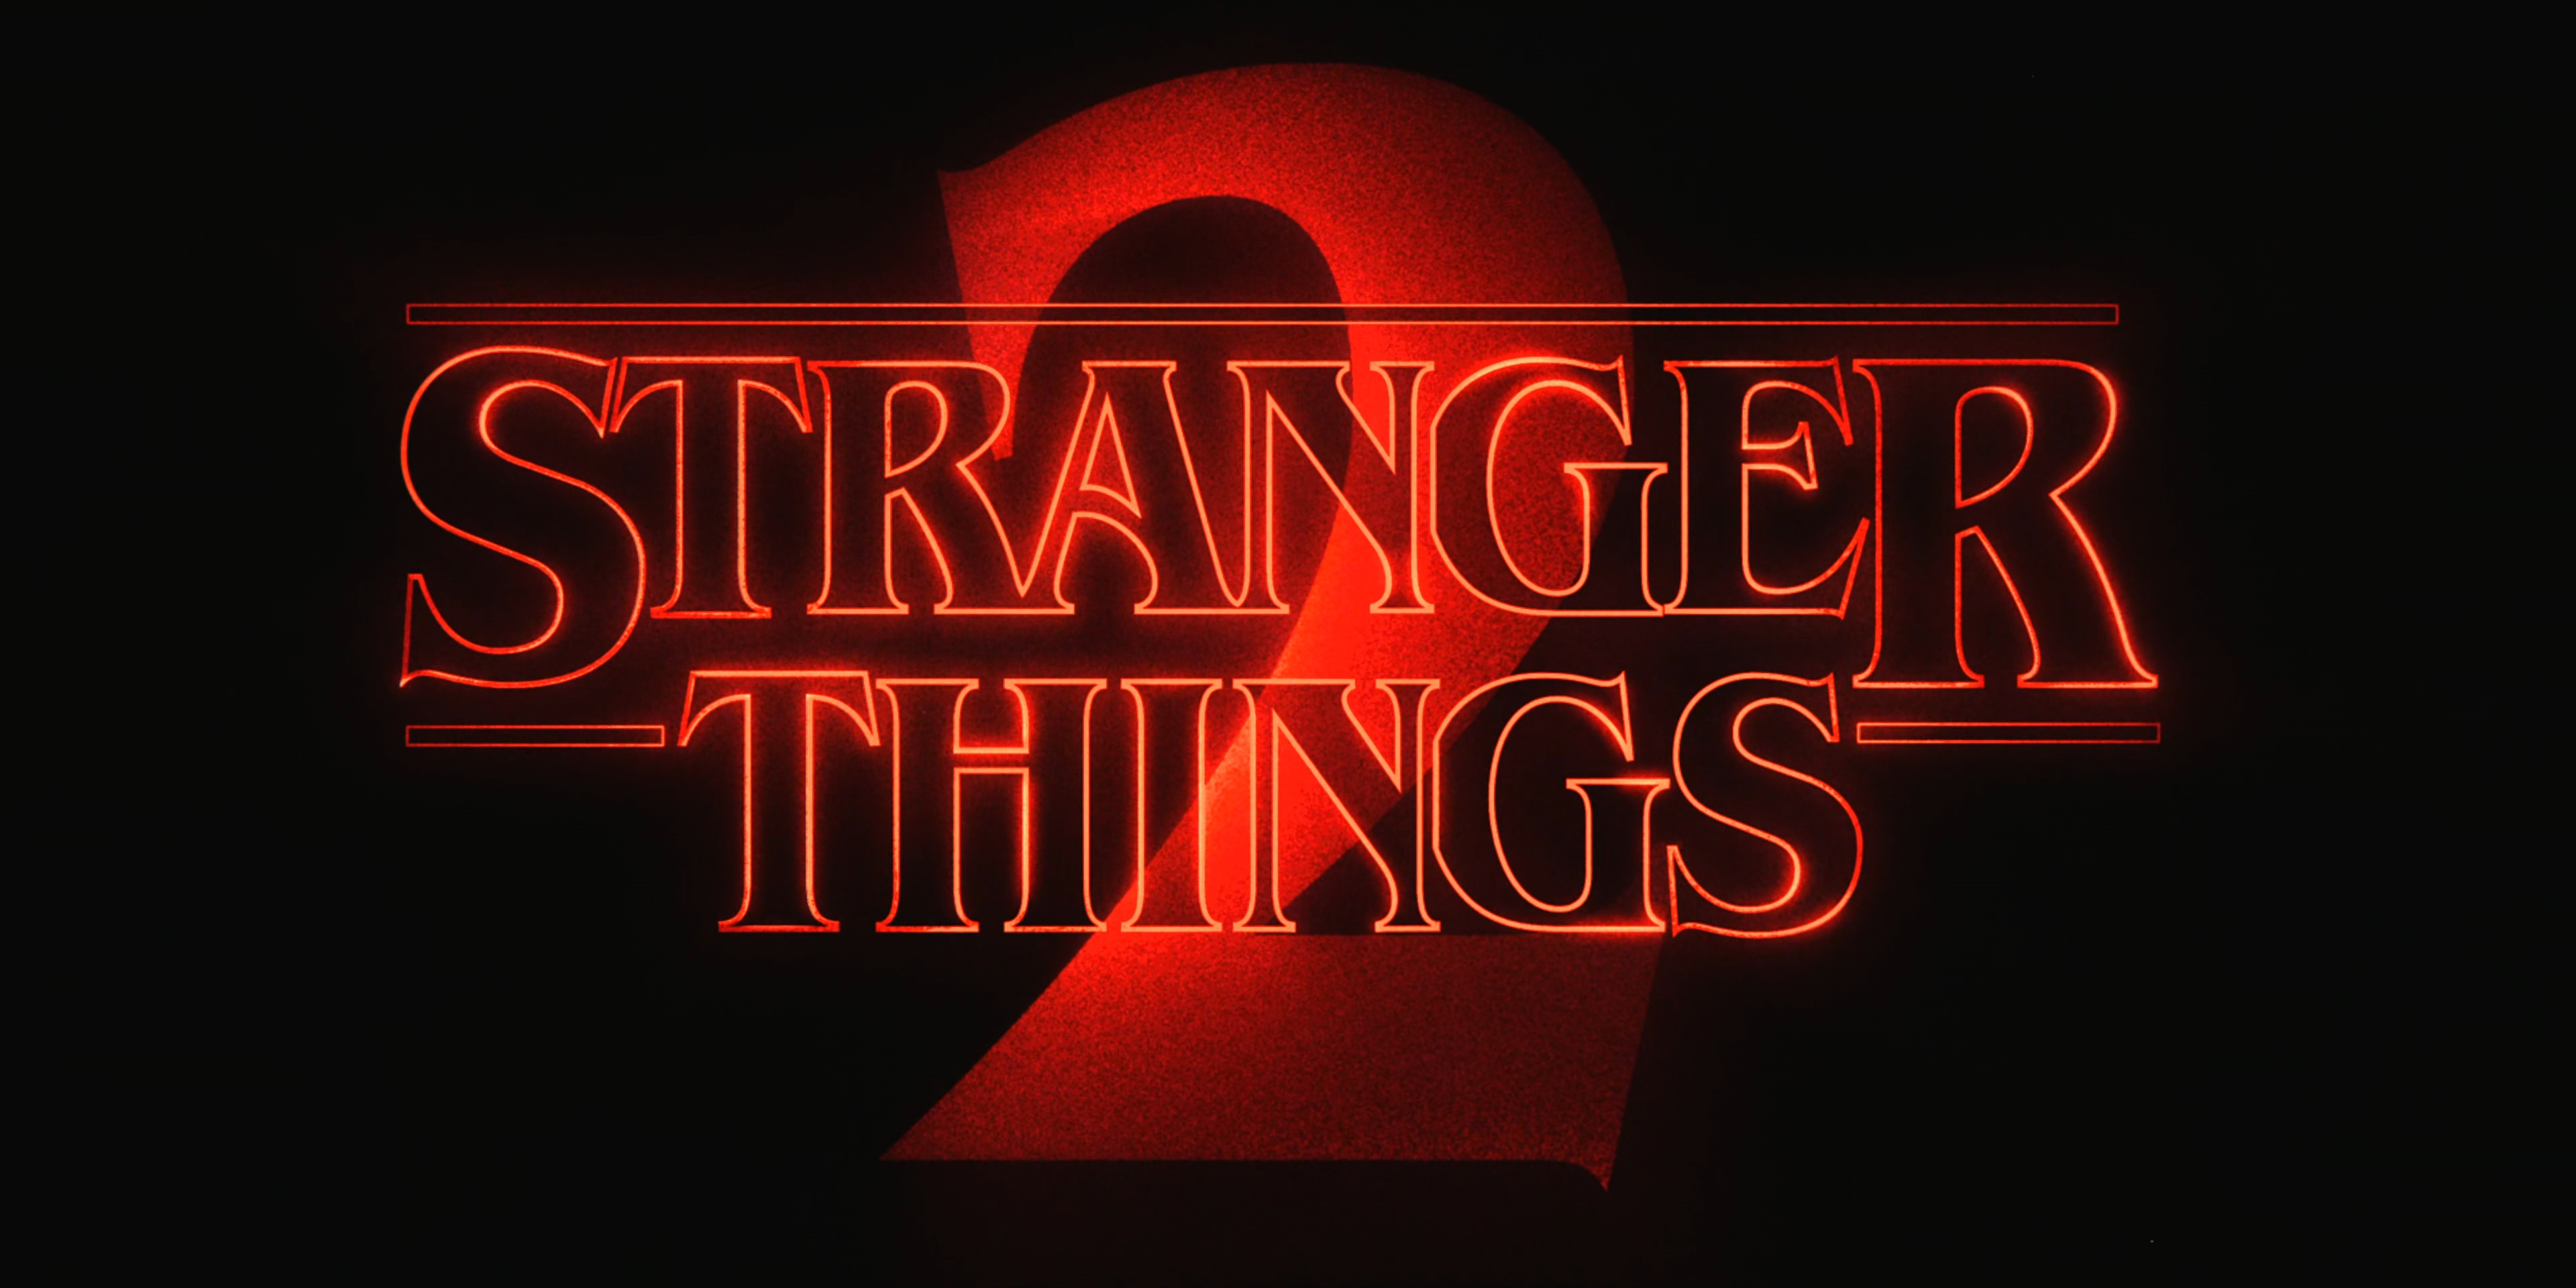 Stranger Things 2, em análise